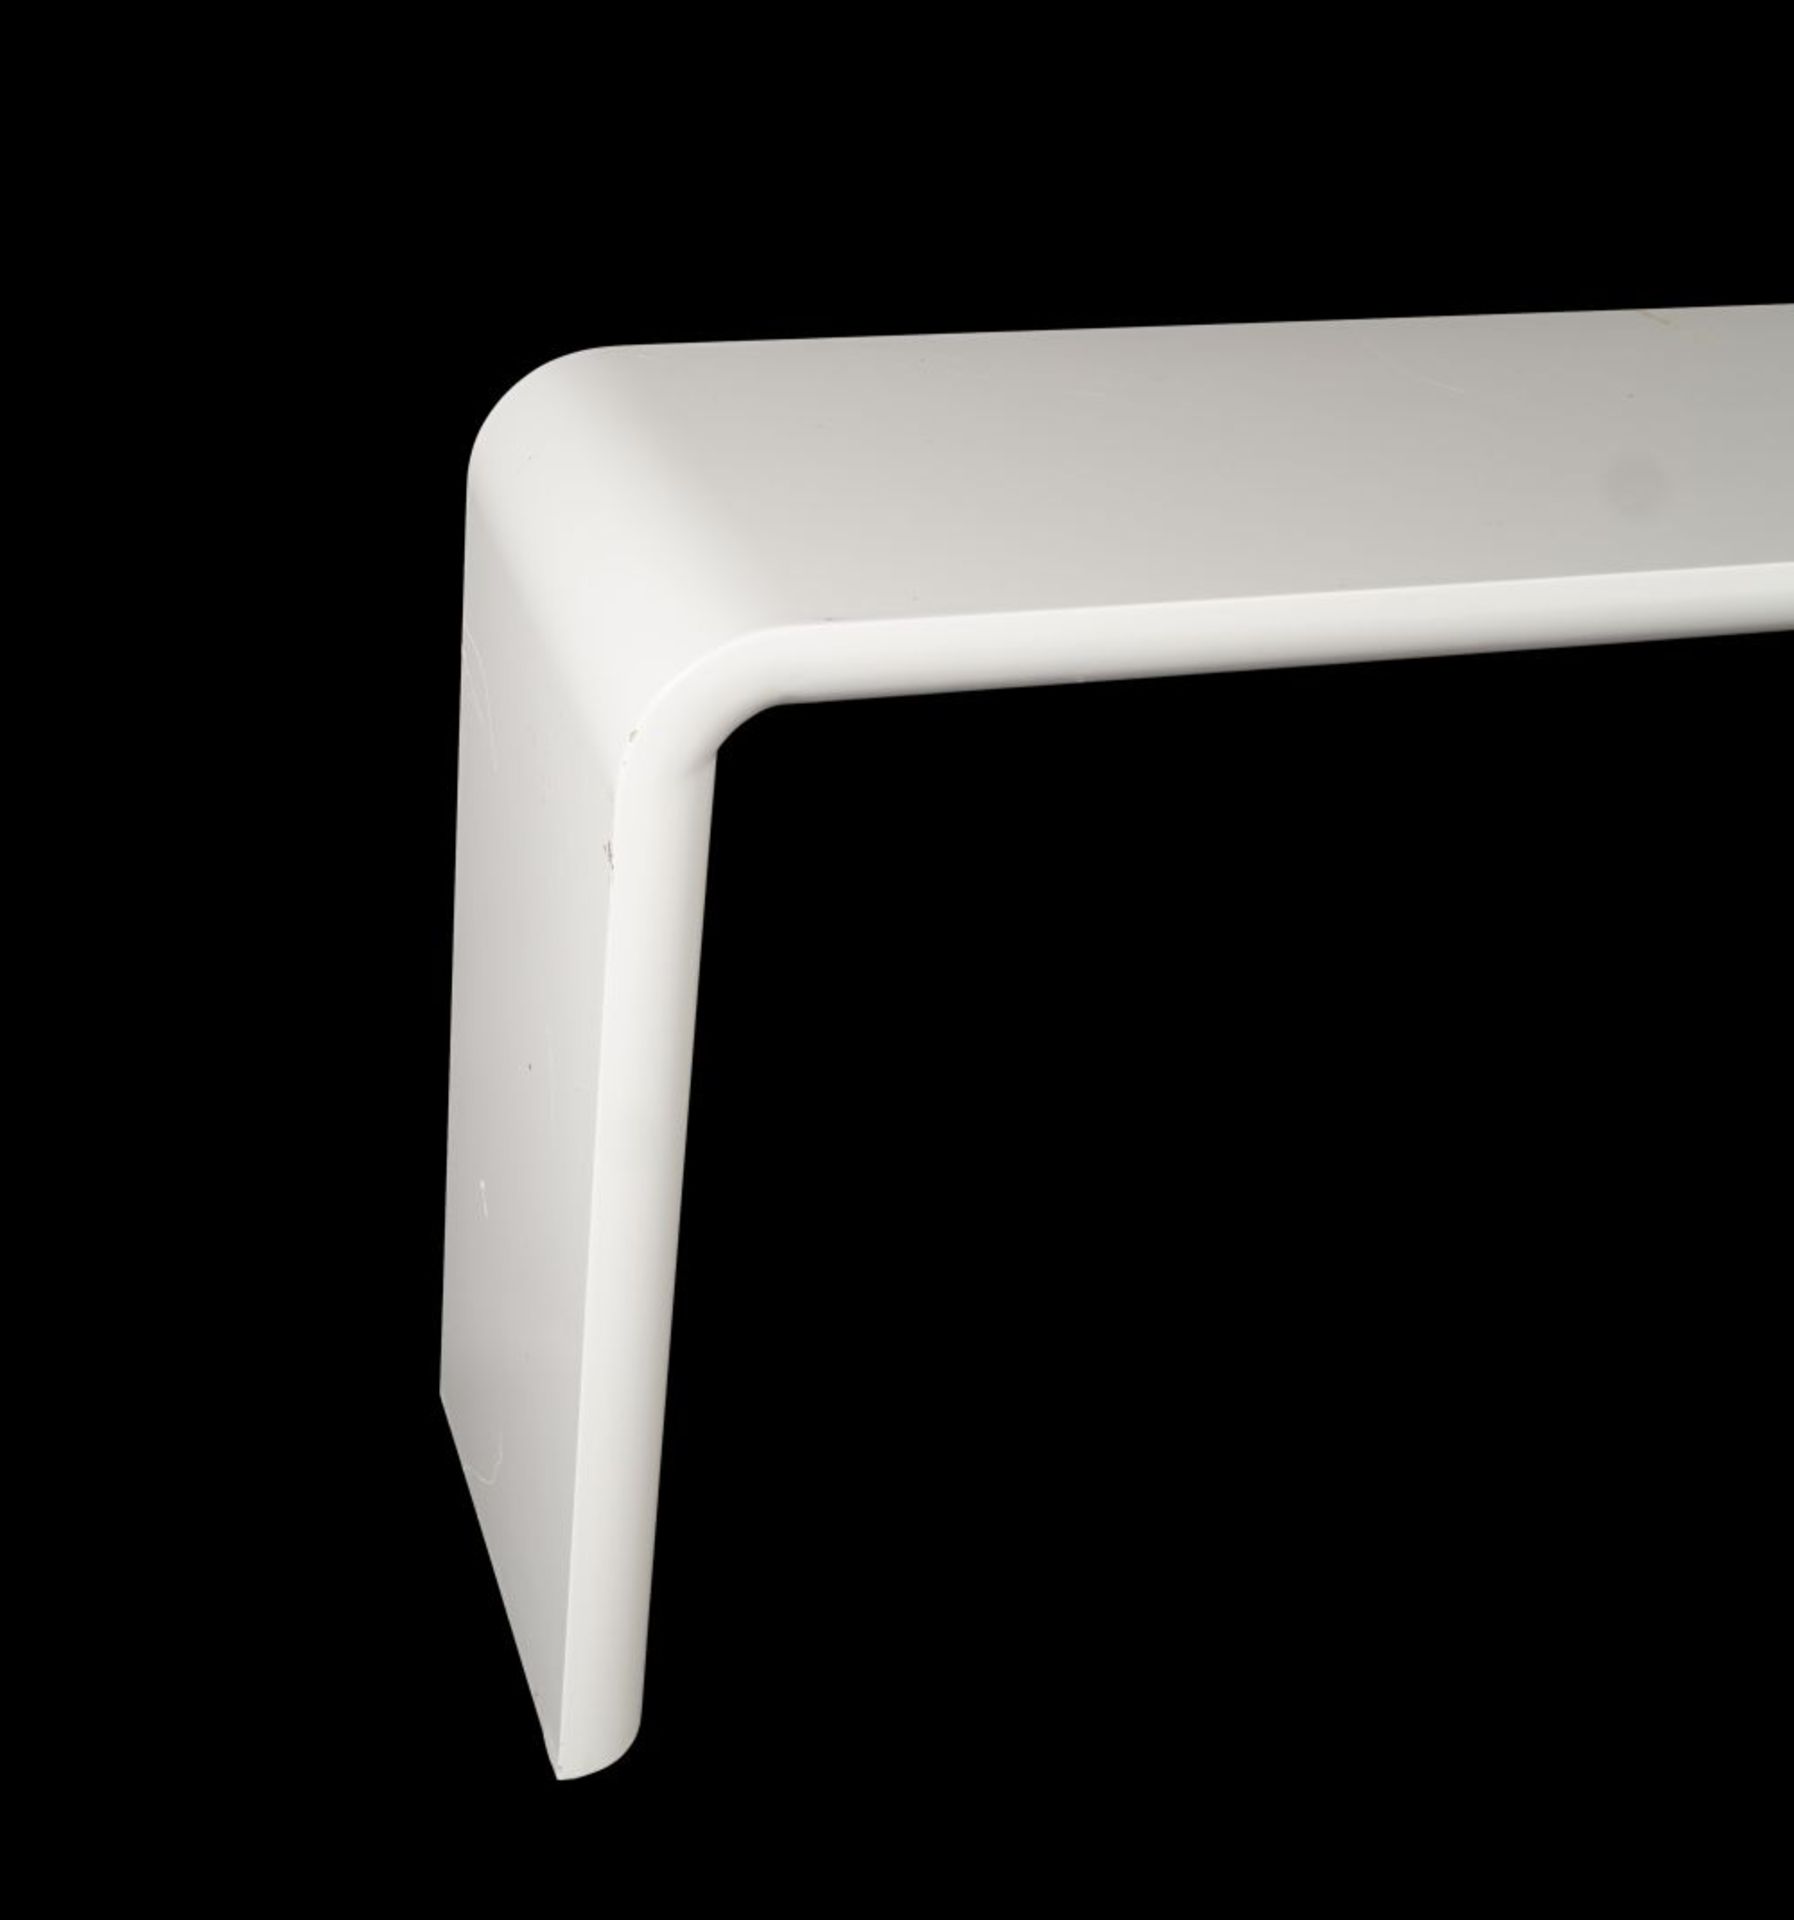 DESIGNER WHITE LAMINATE CONSOLE TABLE - Image 2 of 2